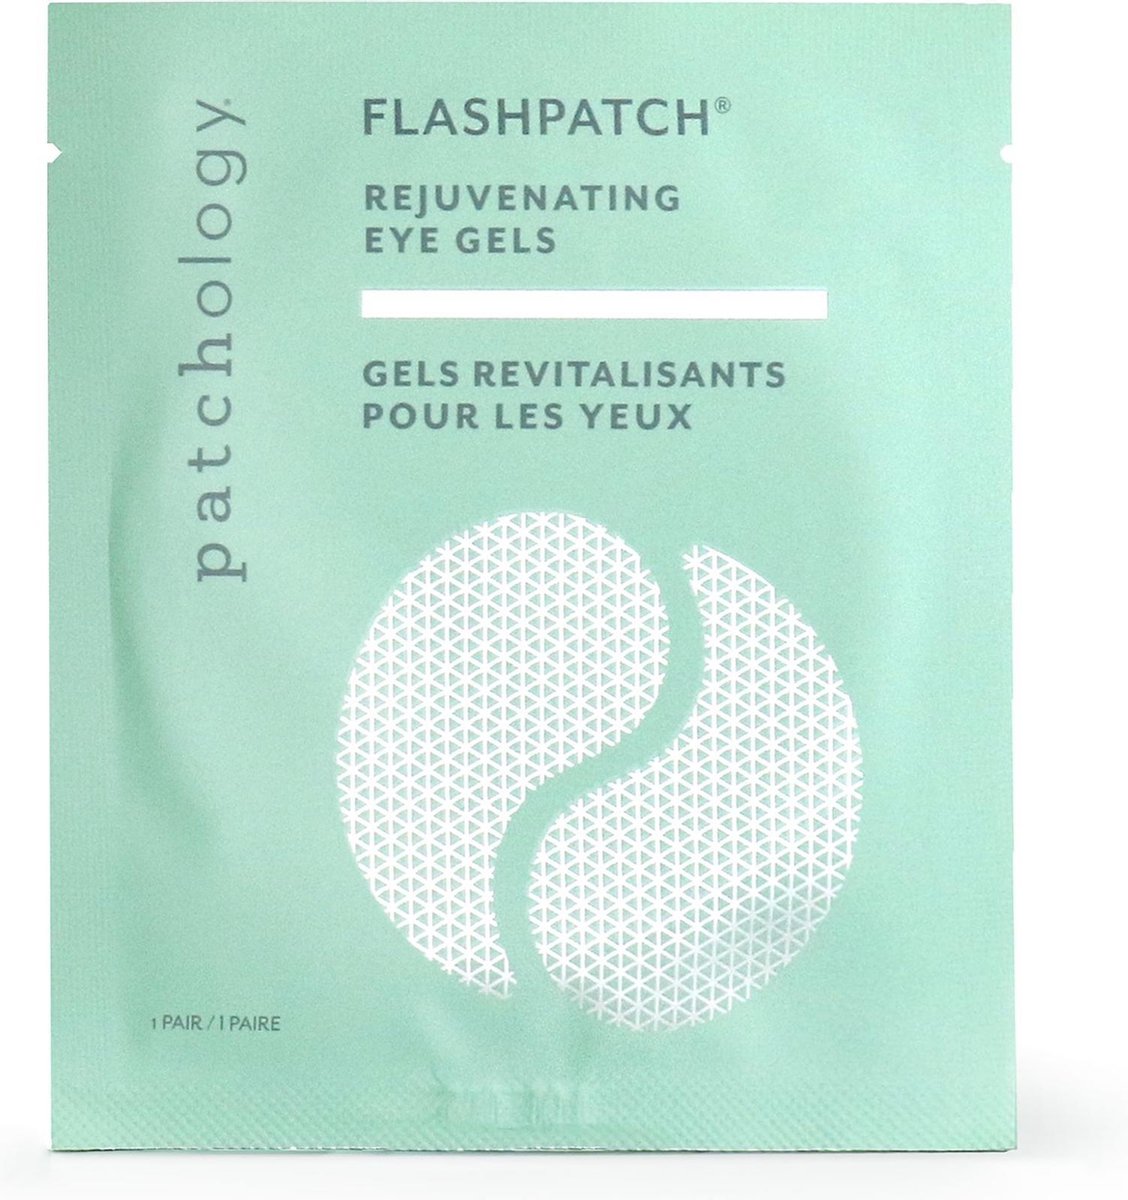 Patchology FlashPatch Oog Gel Patches Rejuvenating